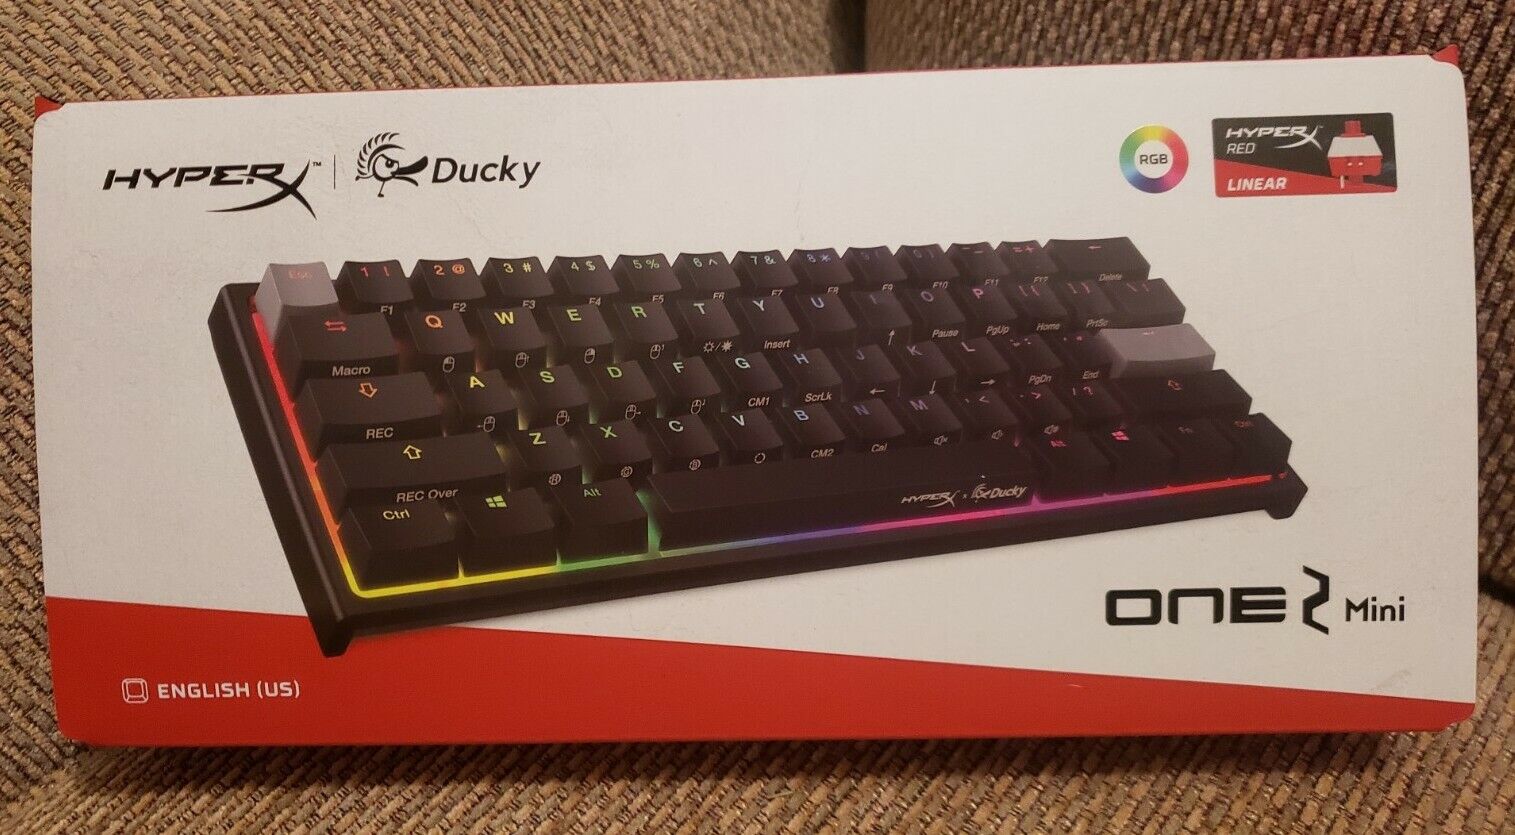 🔥 HyperX x Ducky One 2 Mini Mechanical Gaming Keyboard - *IN HAND FAST SHIP* 🔥